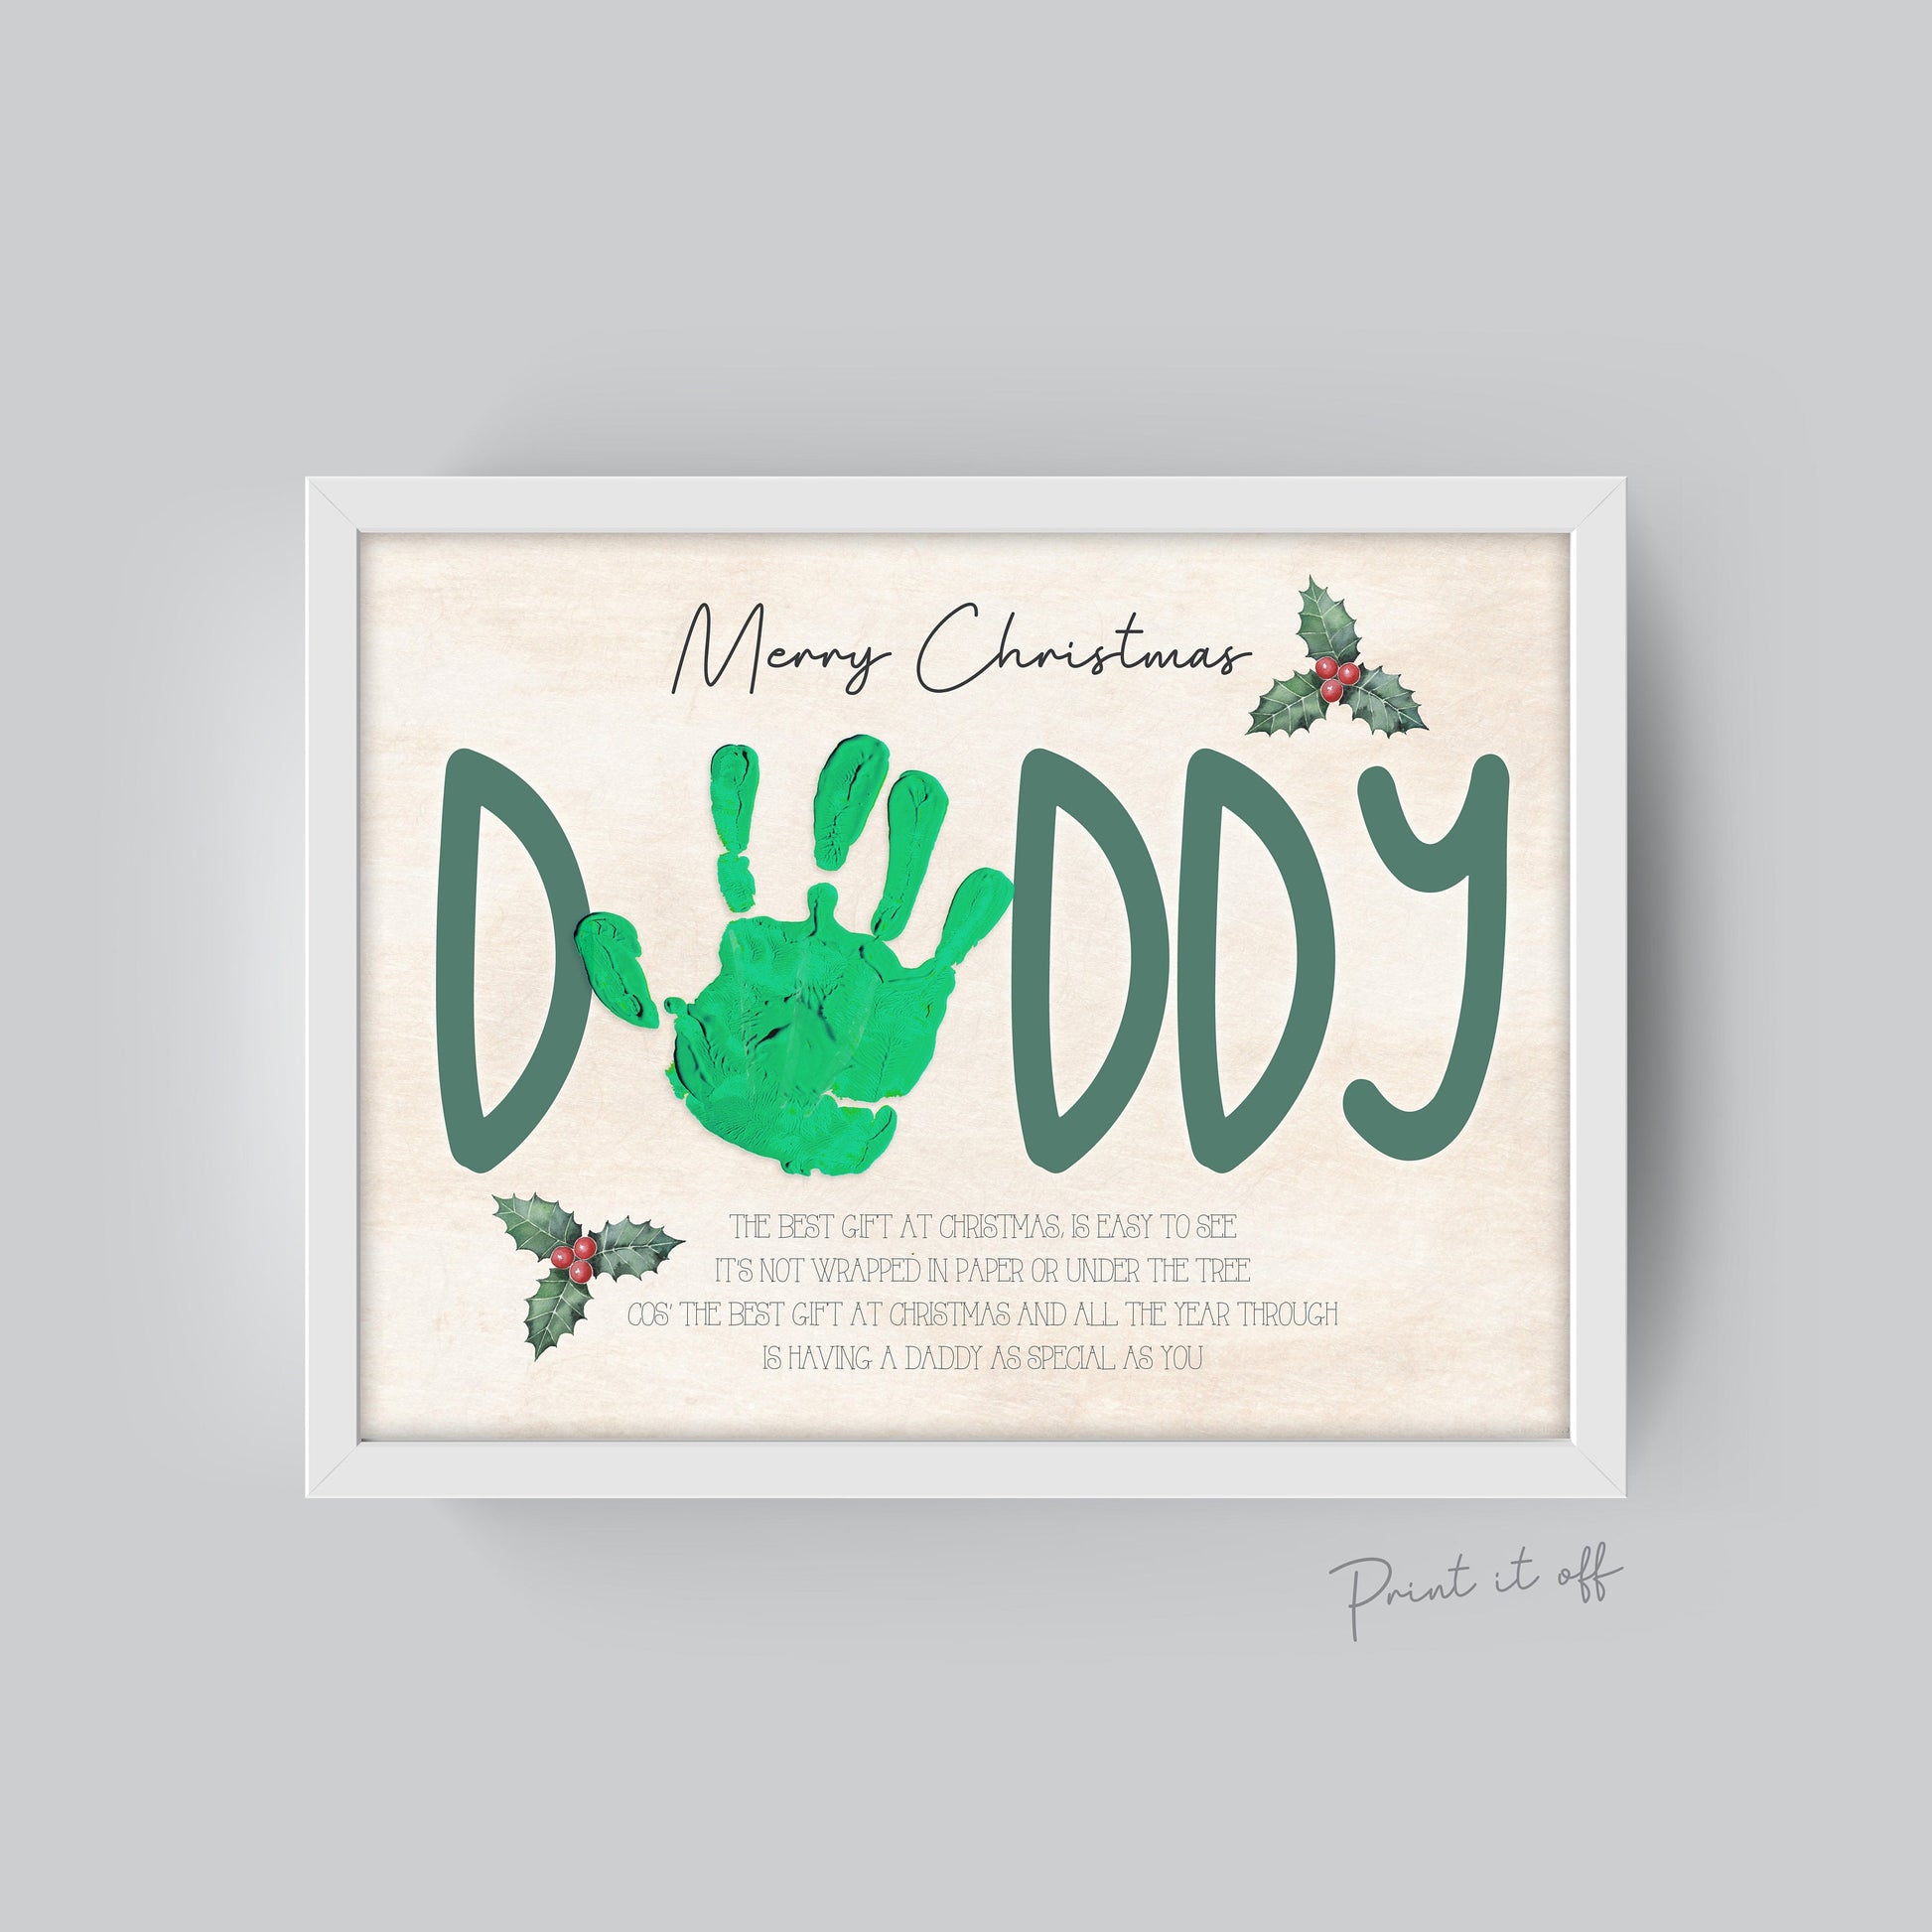 Handprint Keepsake Family Hand Print Kit Included Family Hands Handprint  Art Personalised Family Print Mum Dad Gift From Kids 